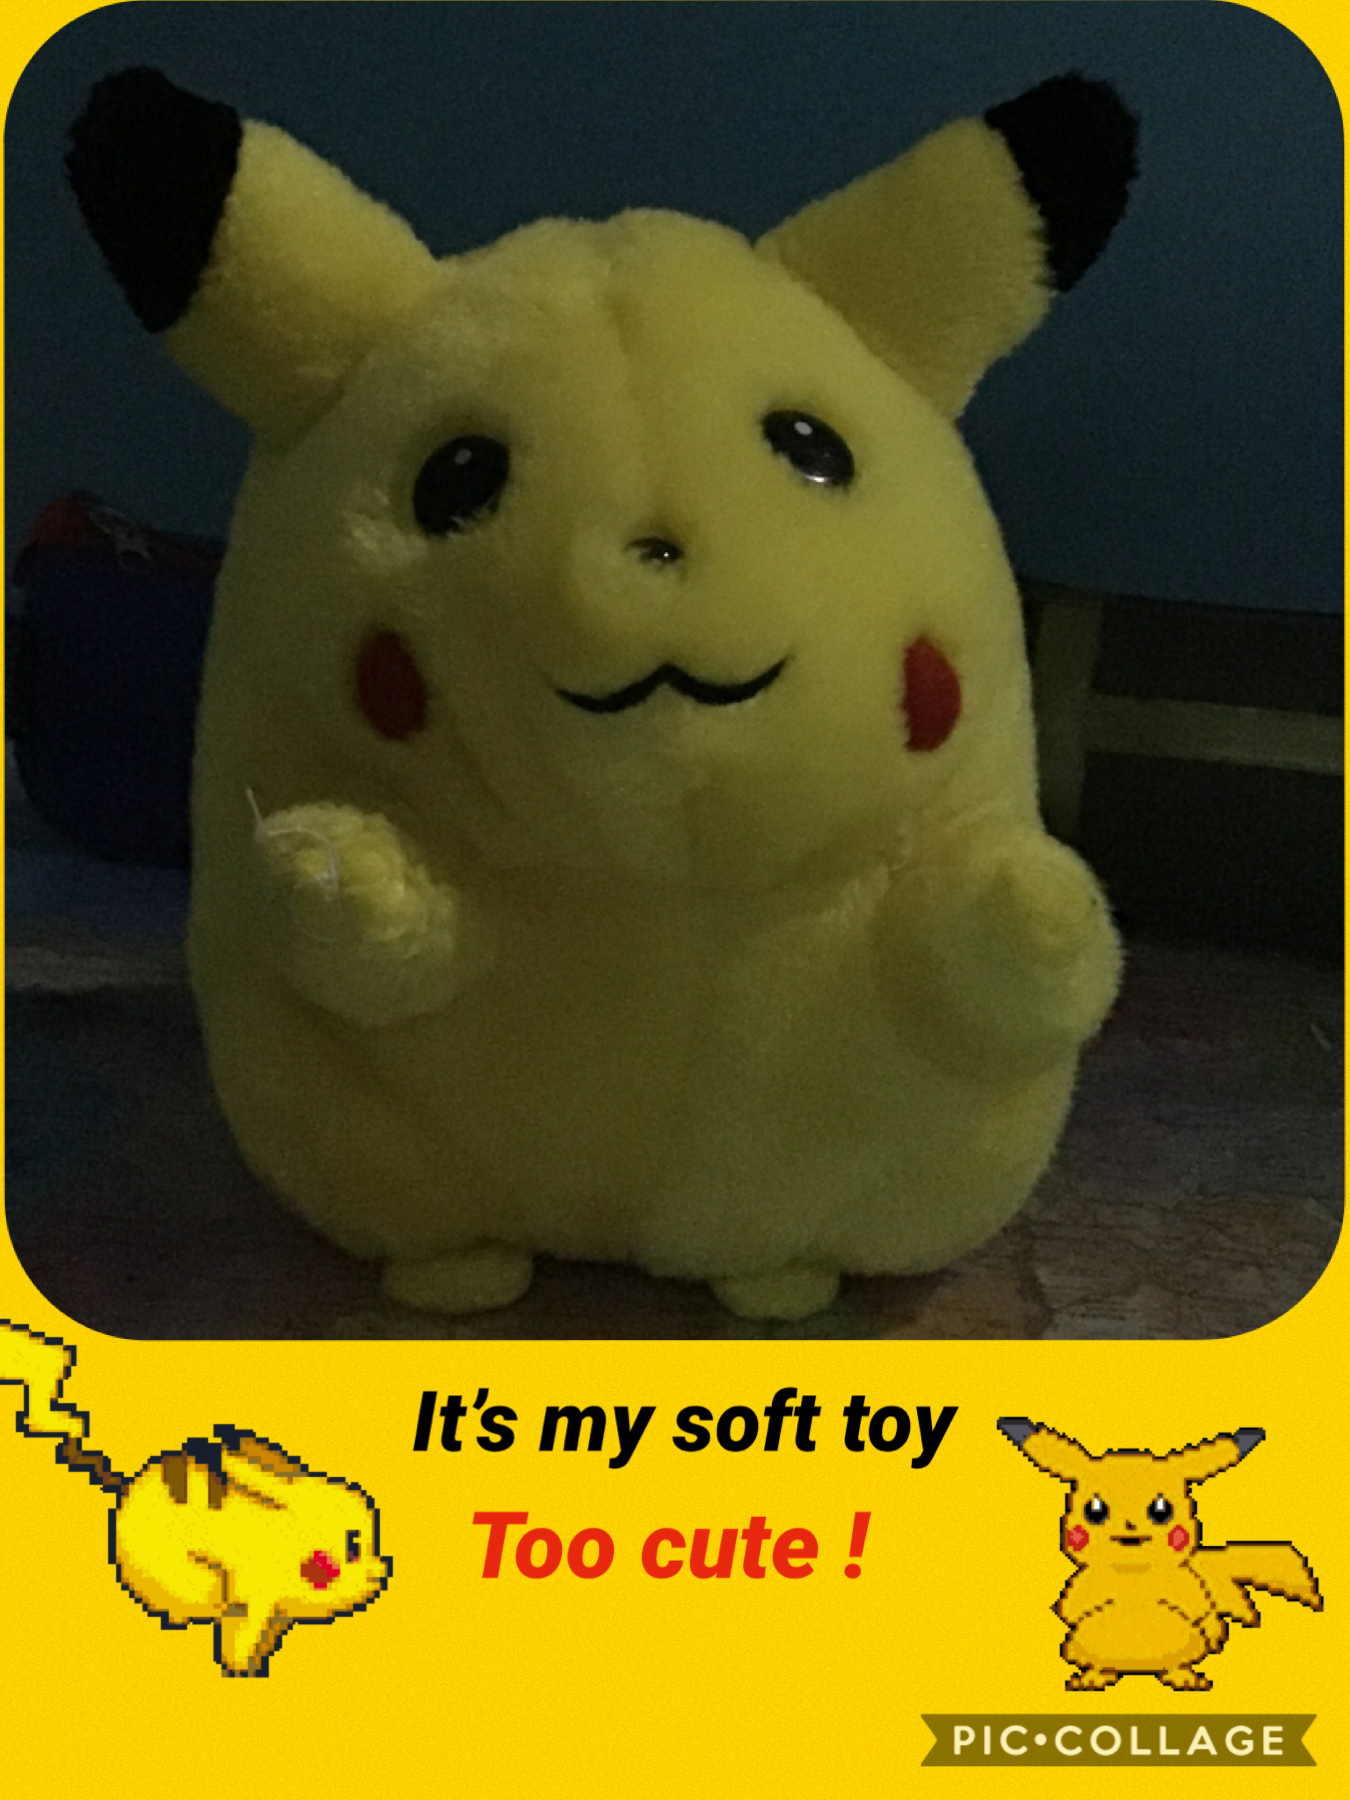 The cutest Pikachu plush in the world ♥️